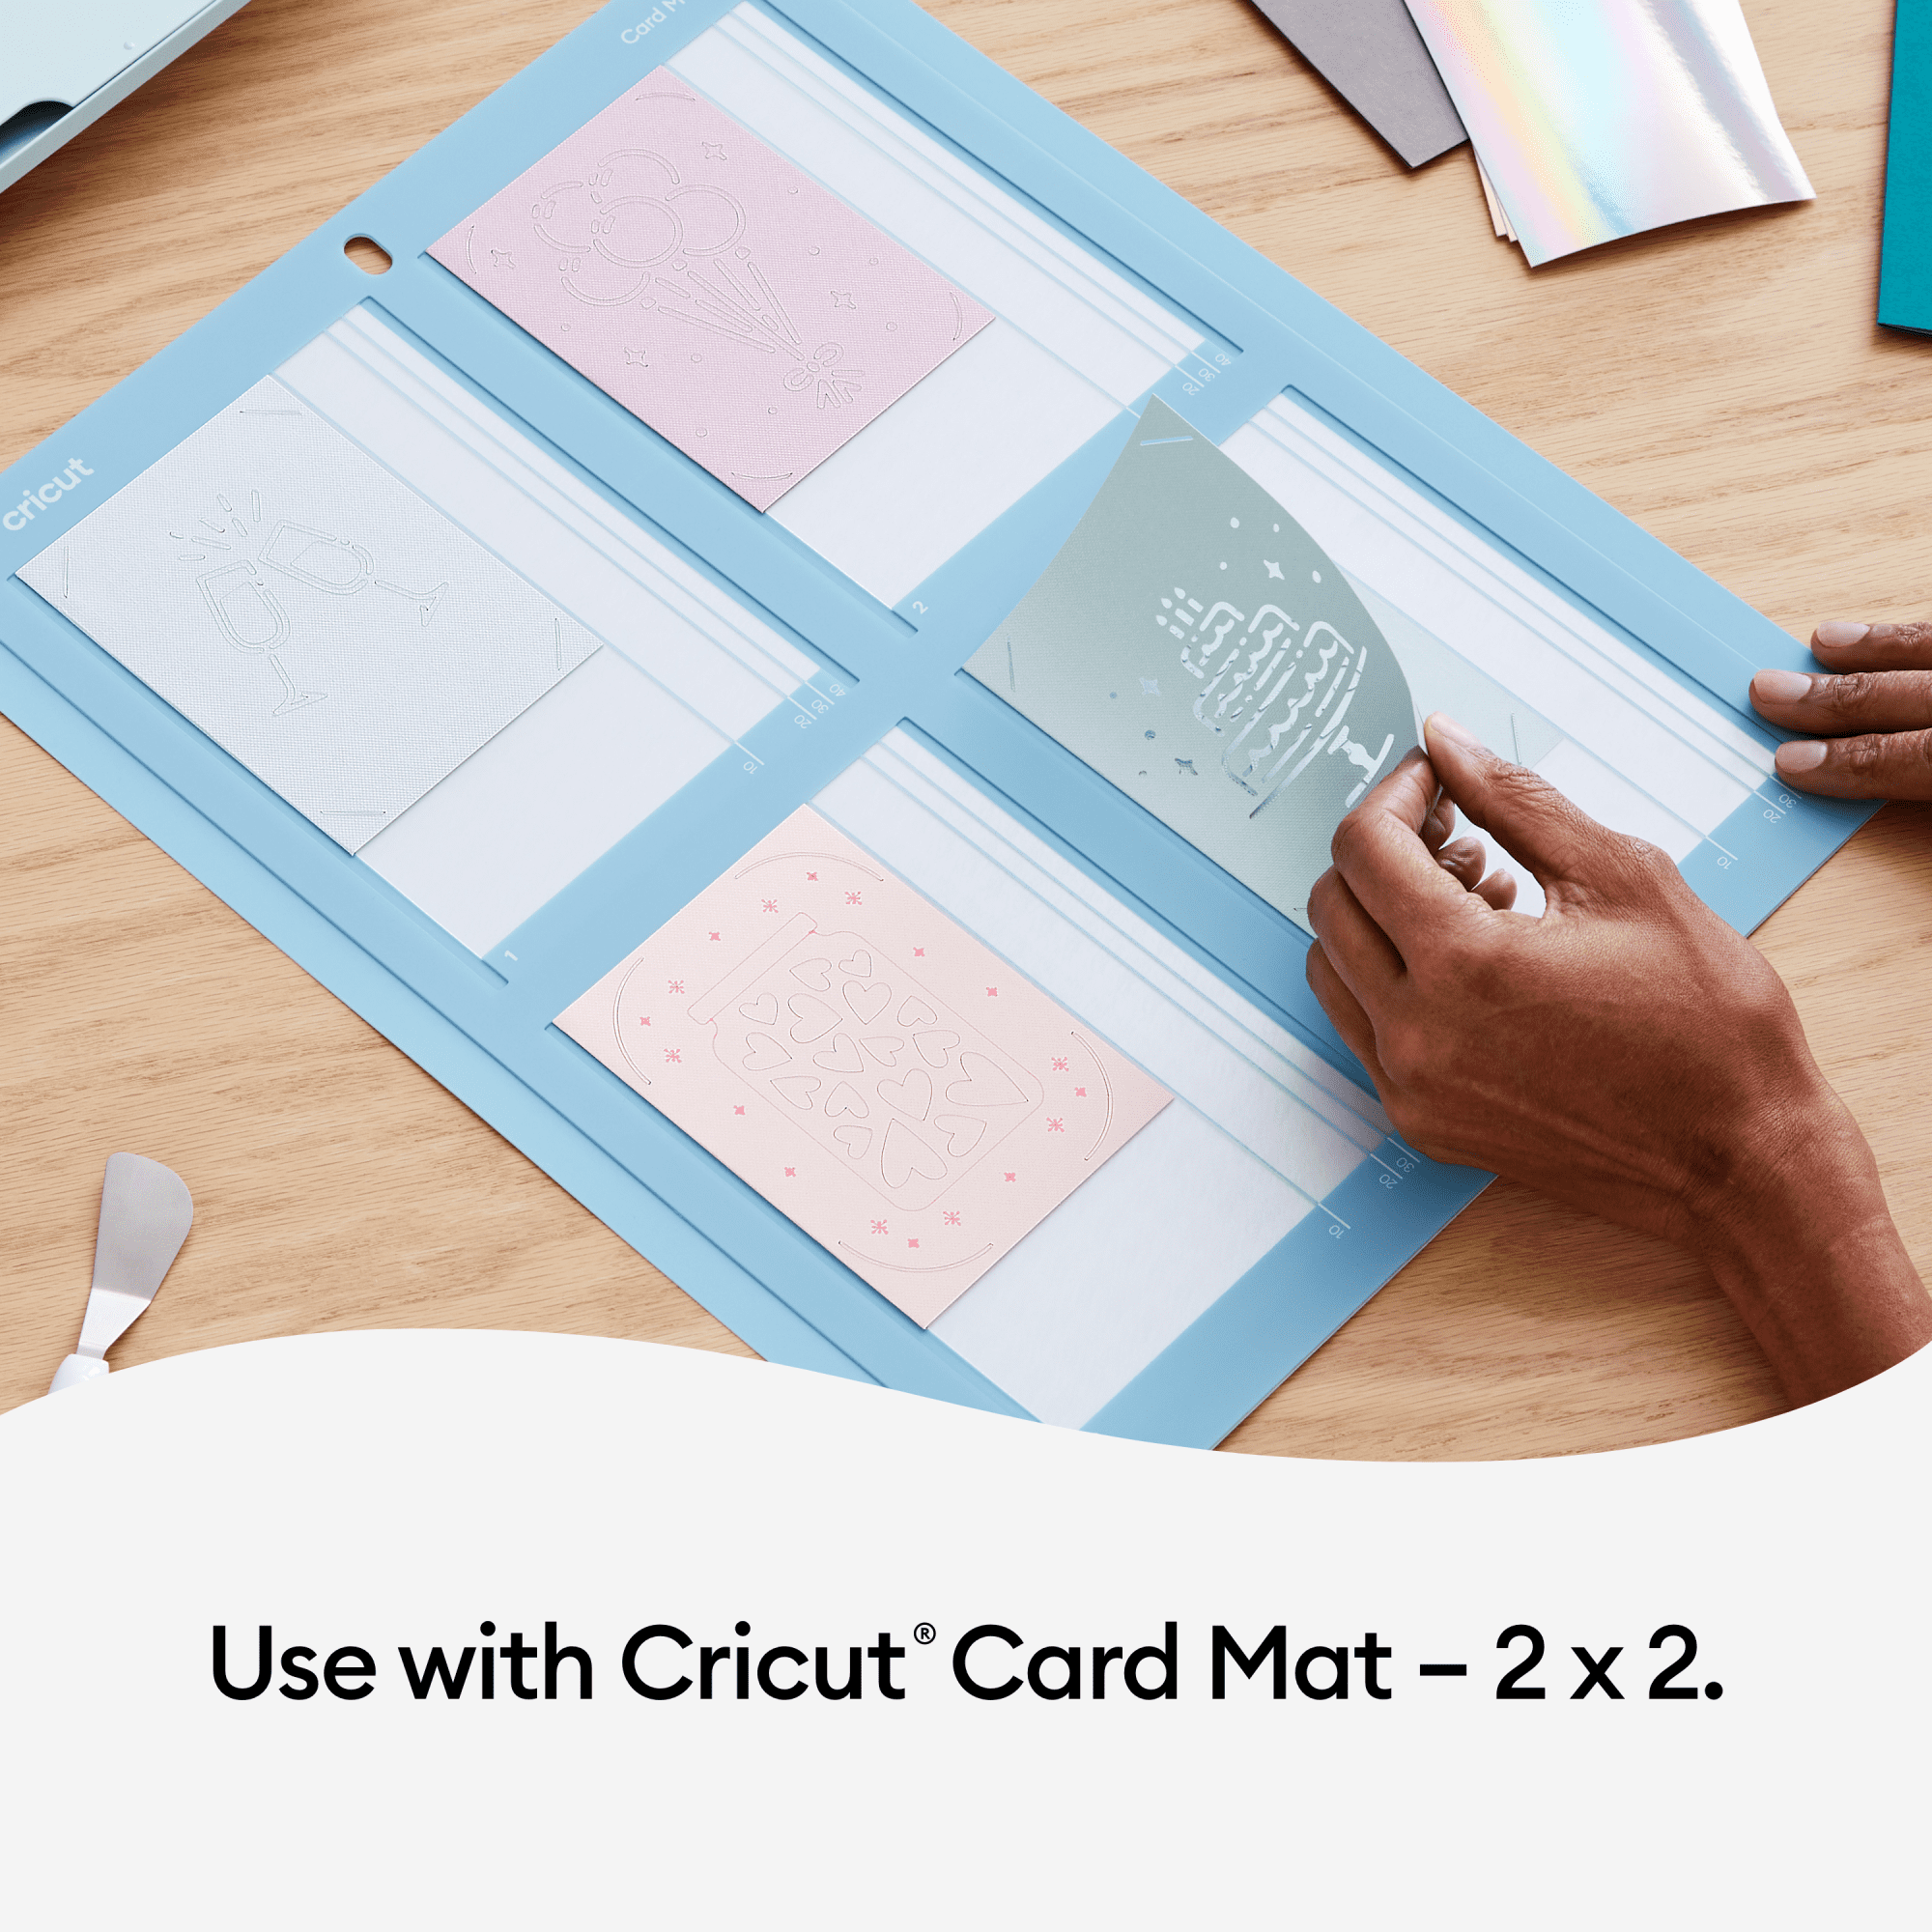 2009488)Cricut Card Mat 2x2 13x16.25 Inch